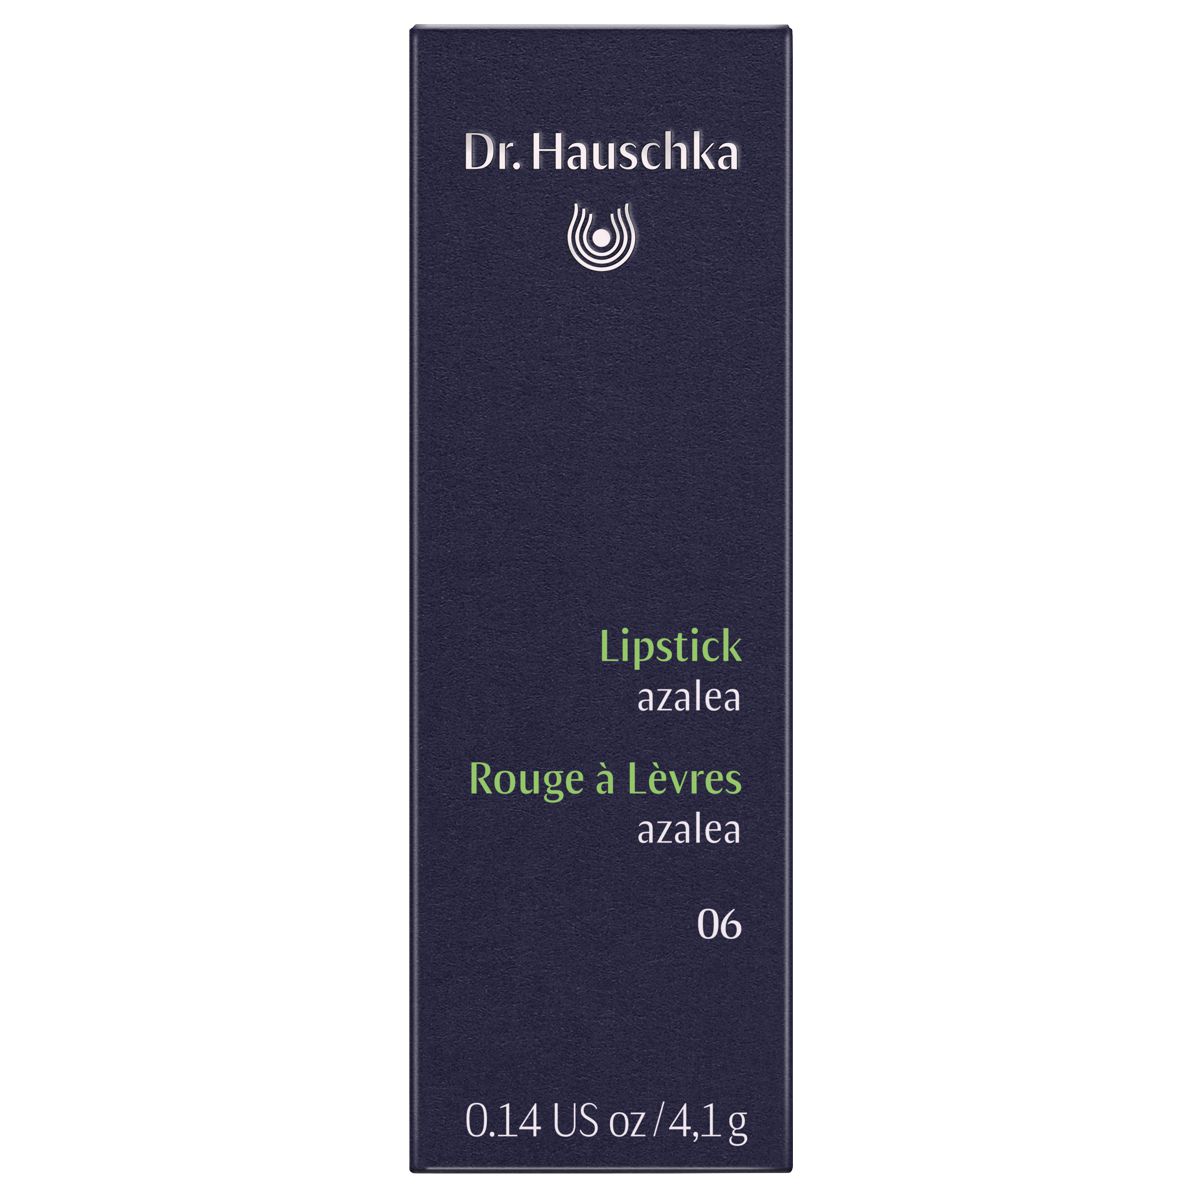 Dr_Hauschka_Lipstick_06_azalea_online_kaufen